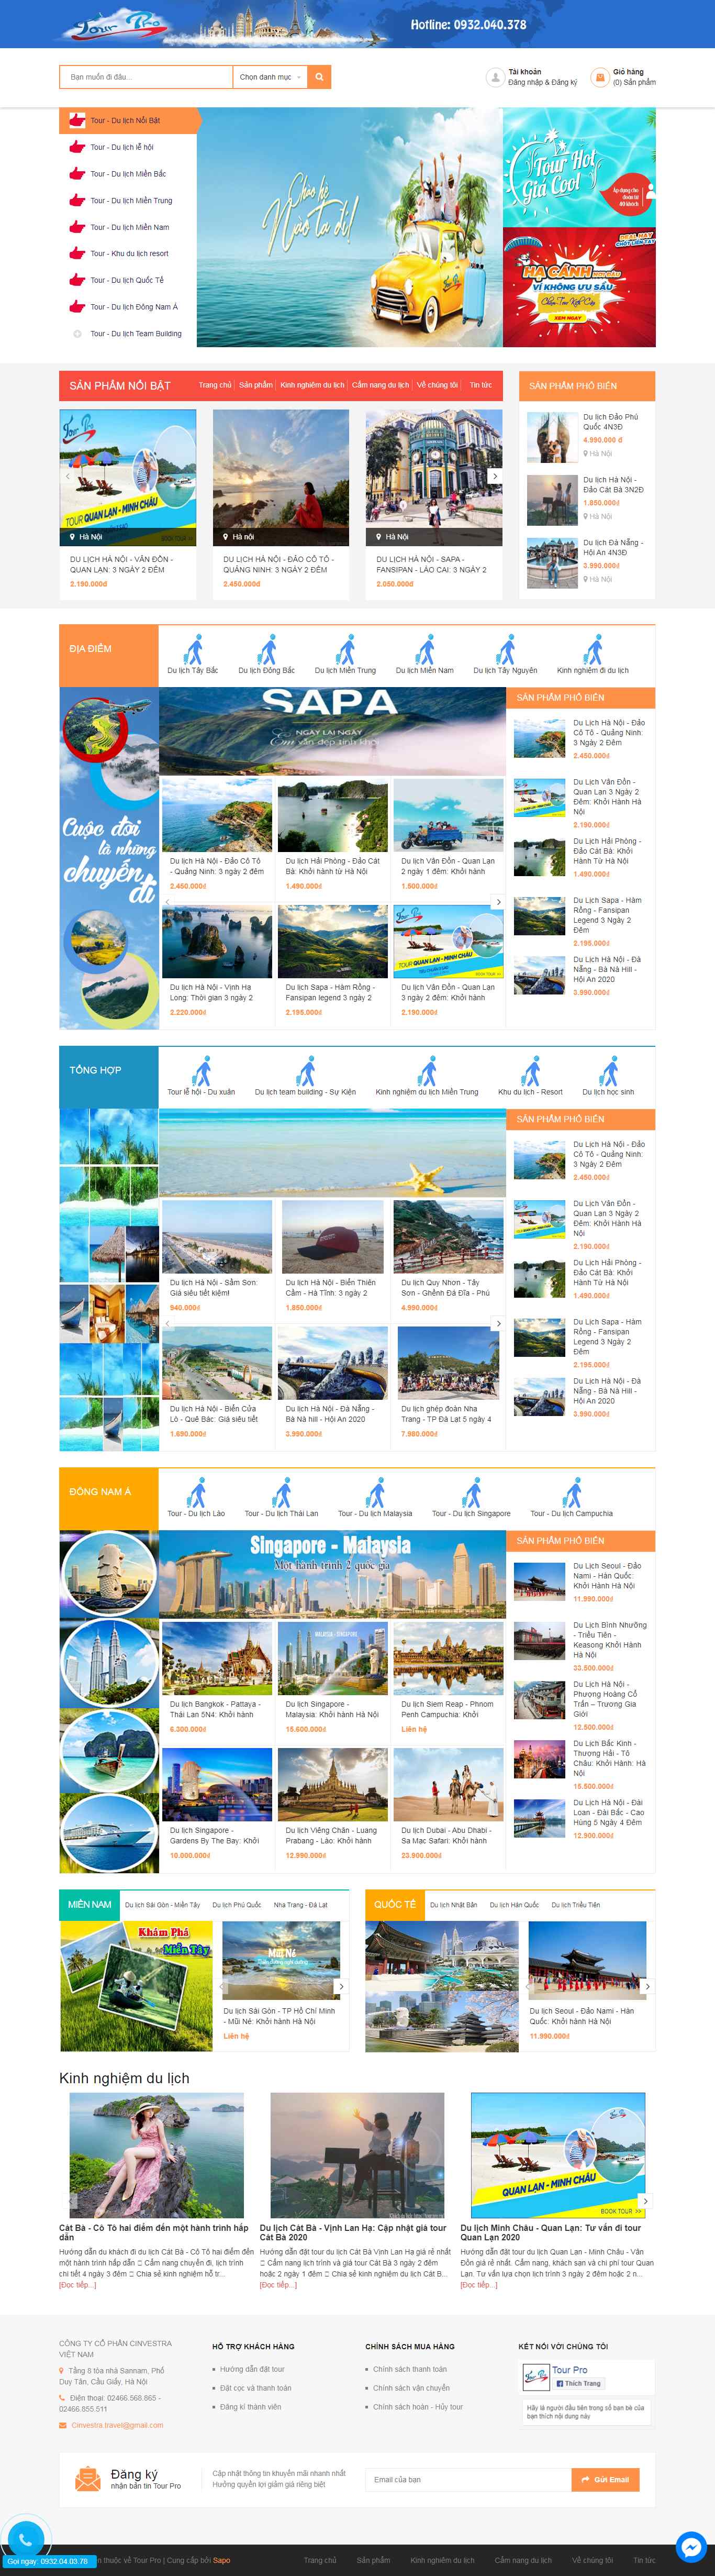 Thiết kế Website tour du lịch - tour.pro.vn